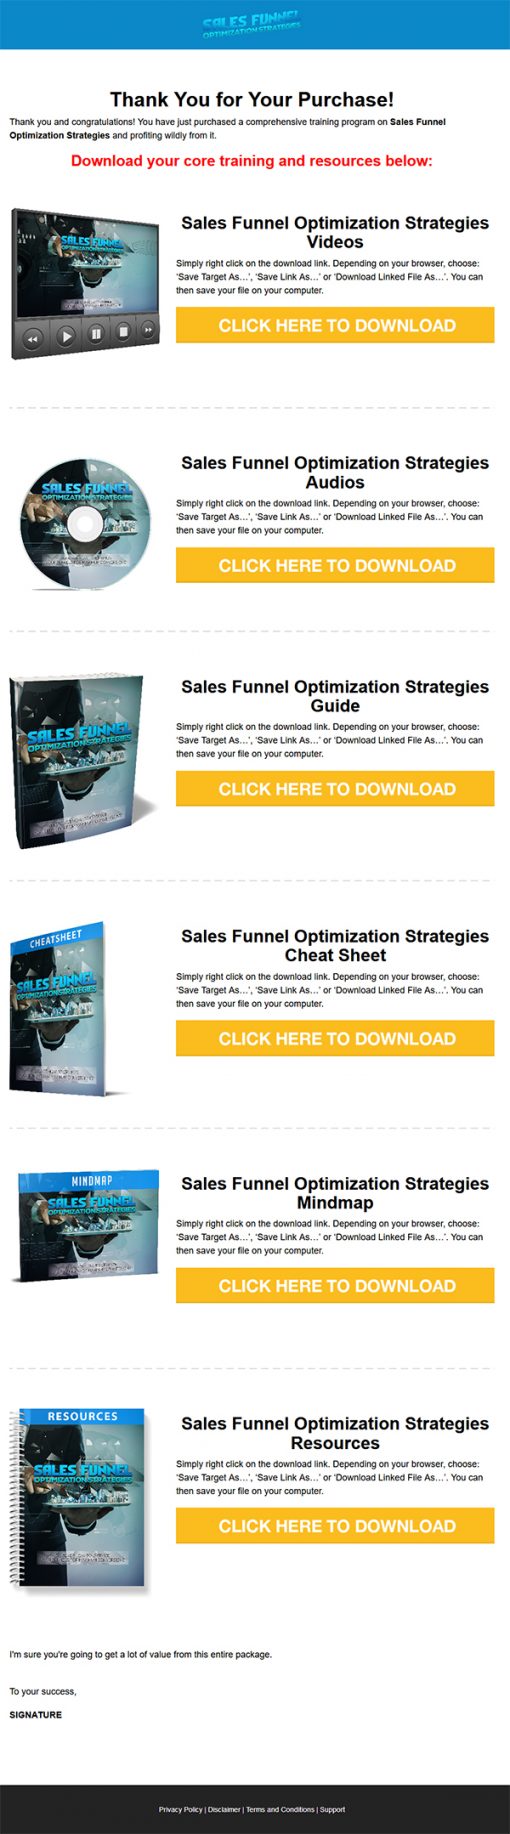 Sales Funnel Optimization Strategies Ebook and Videos MRR